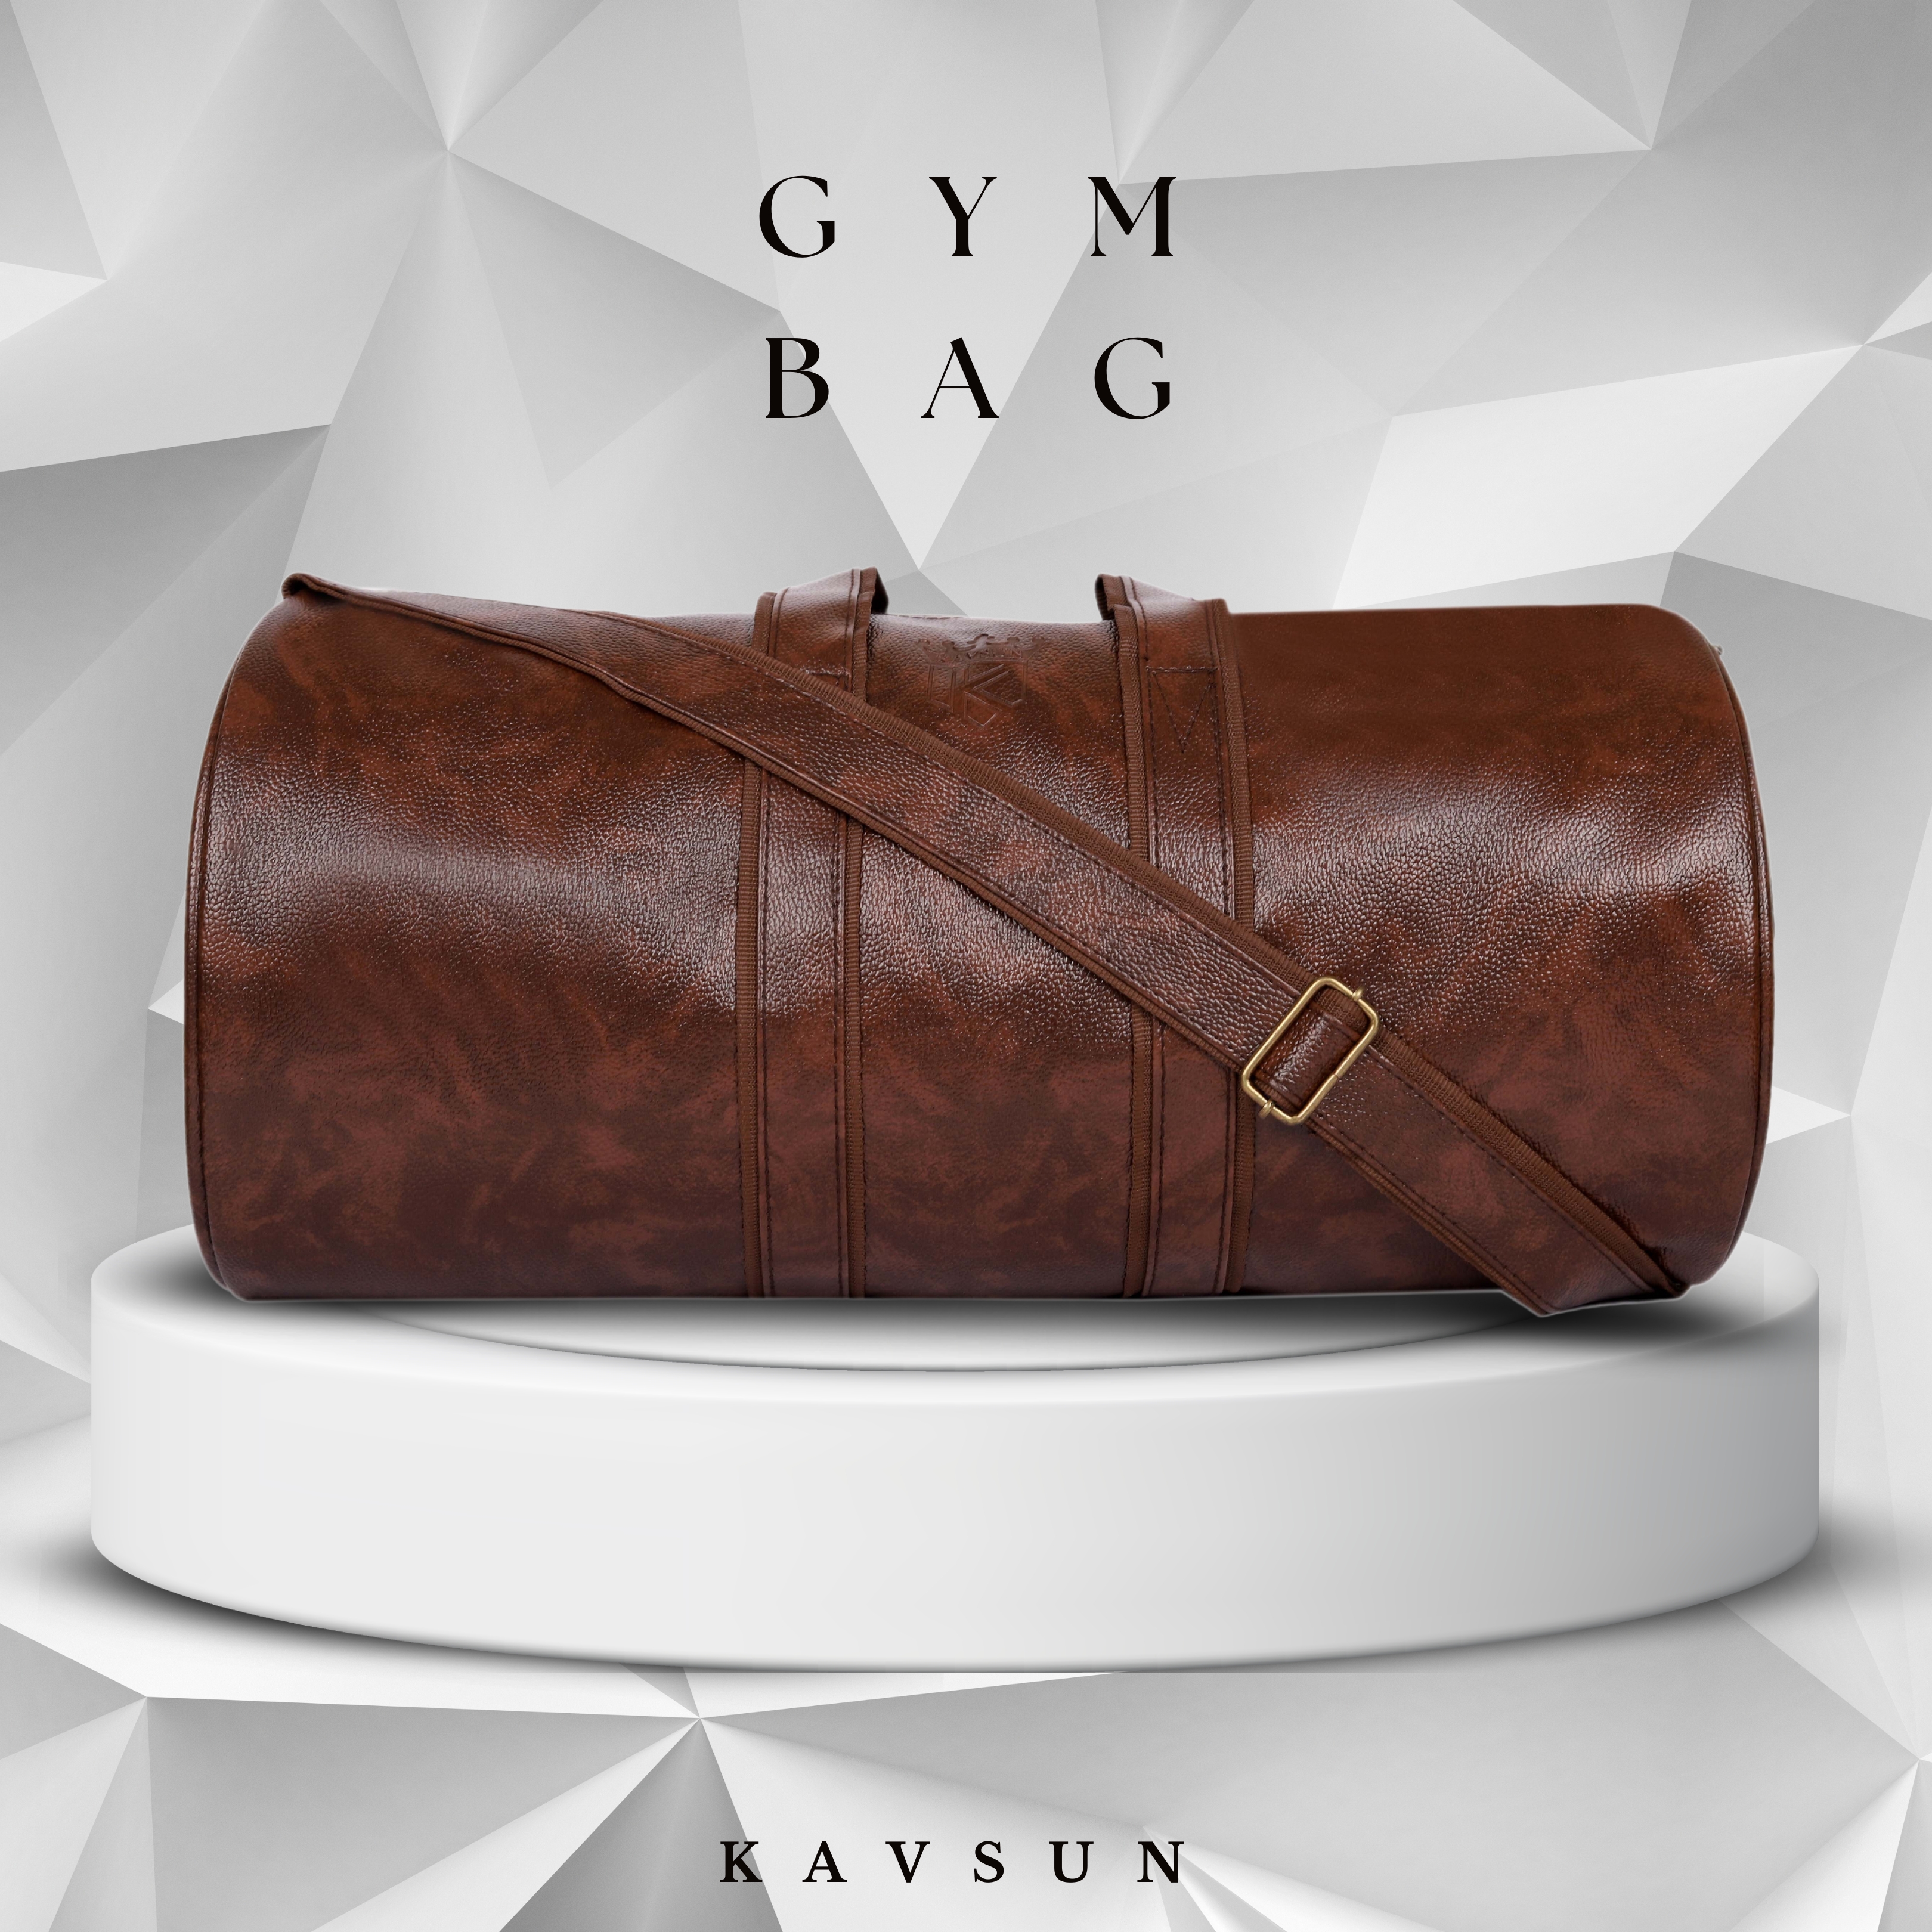 Kavsun Unisex Premium Gym Bag Brown (KVBag-G2)